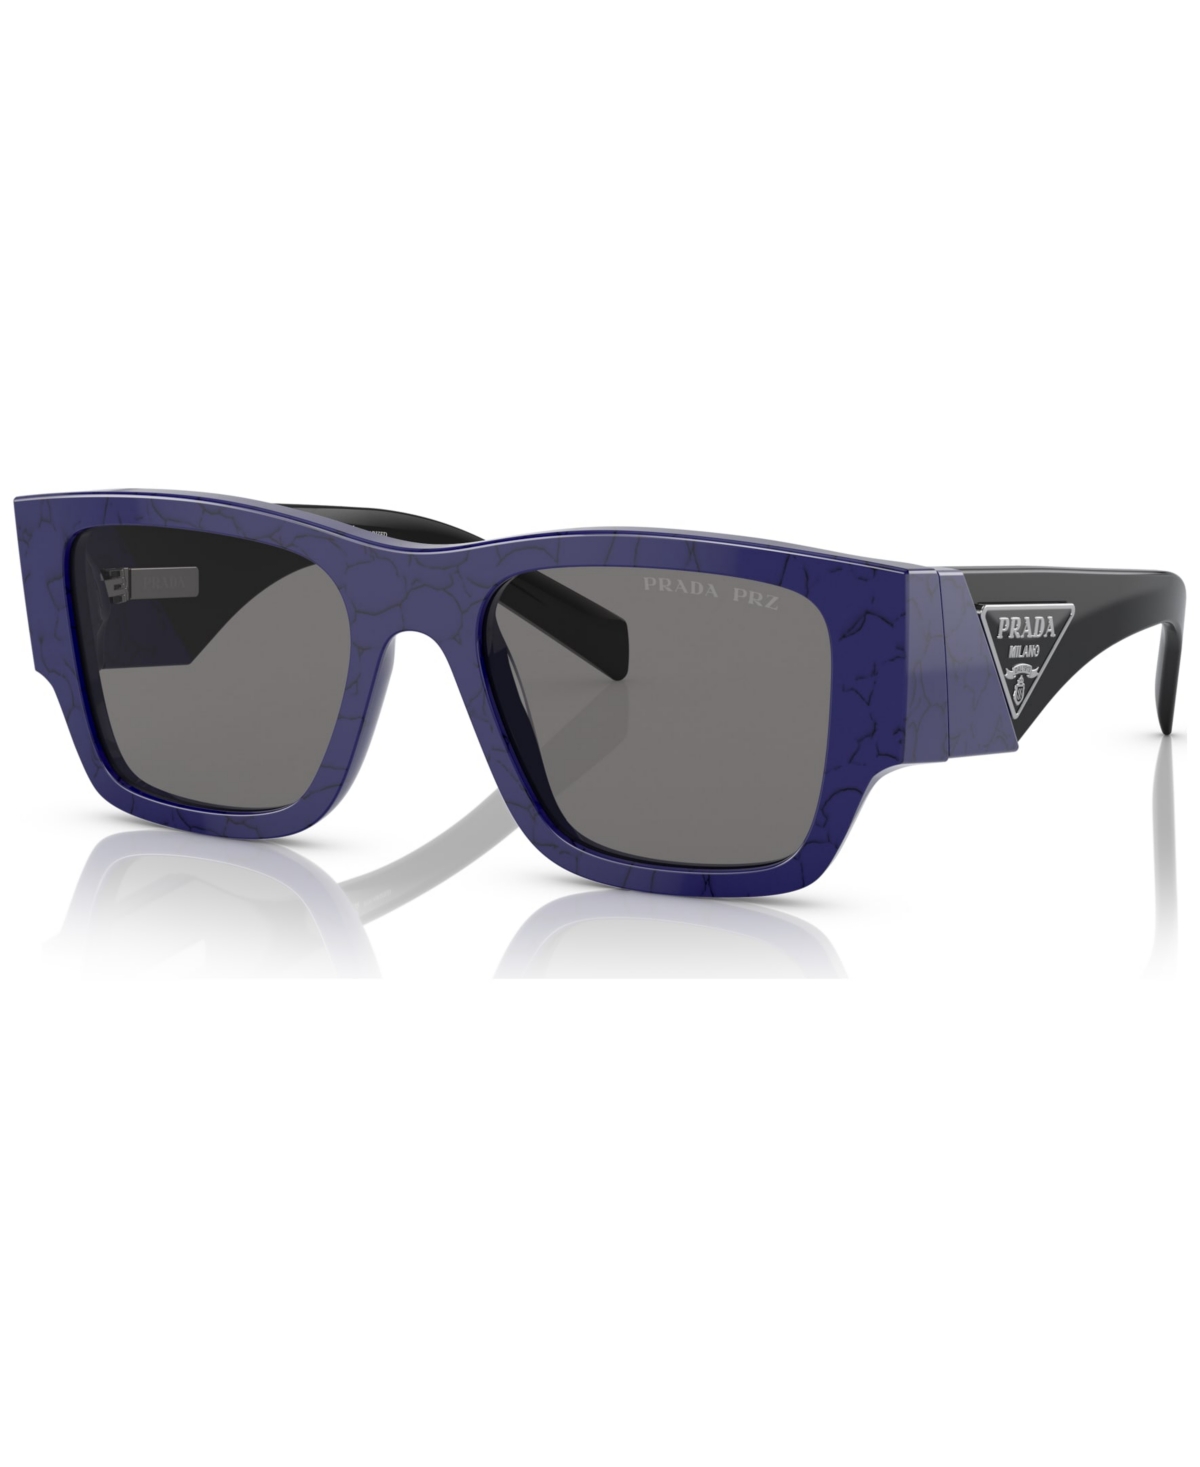 Prada Men's Polarized Sunglasses, Pr 10zs In Baltic Marble